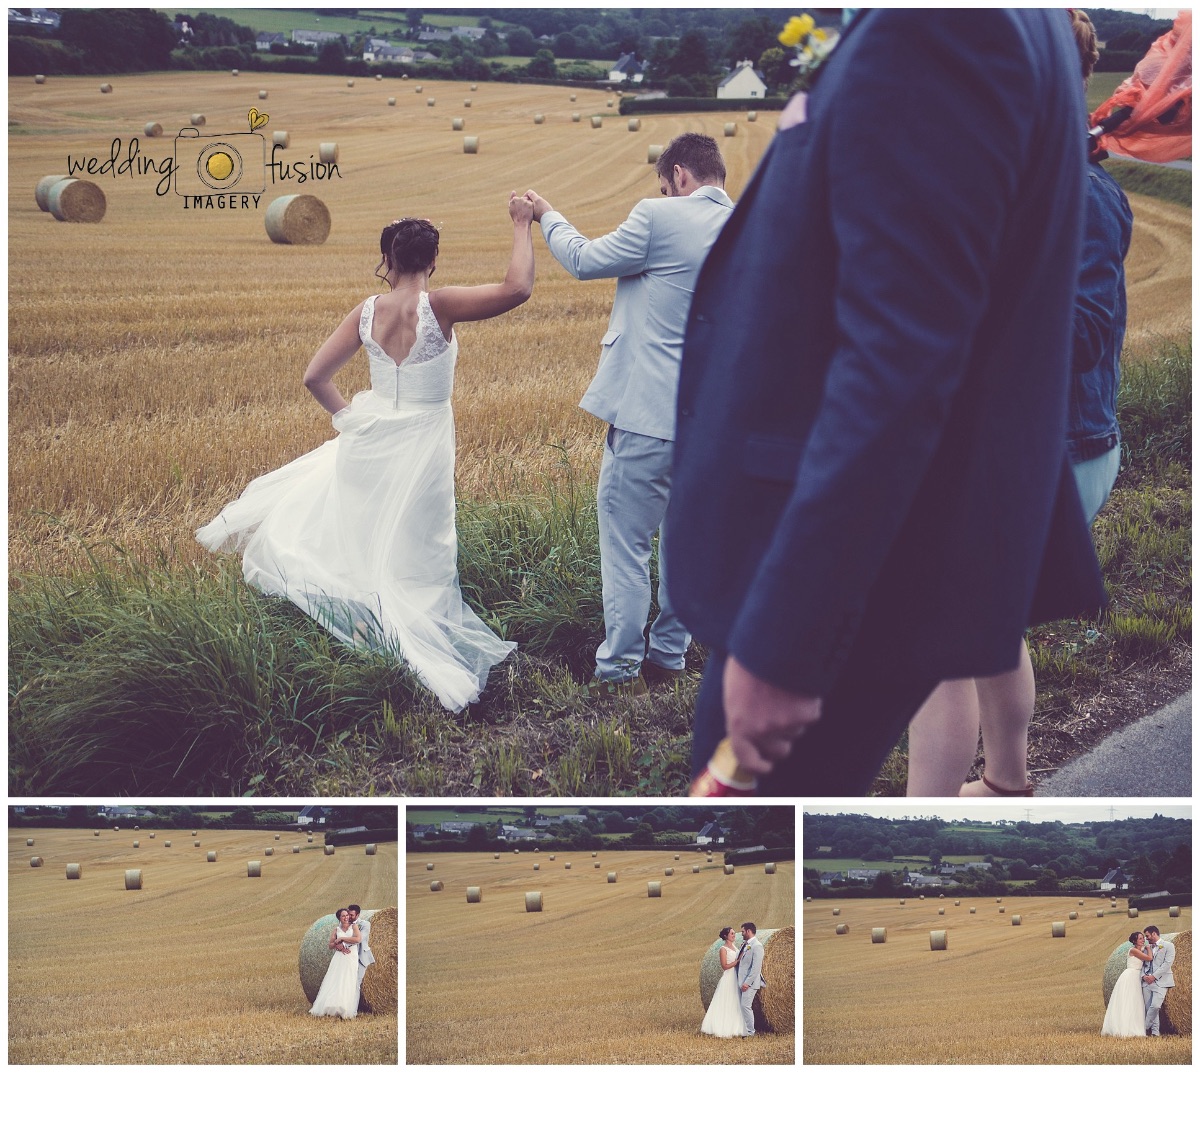 Combo photo/Video. Wedding Fusion Imagery.-Image-50